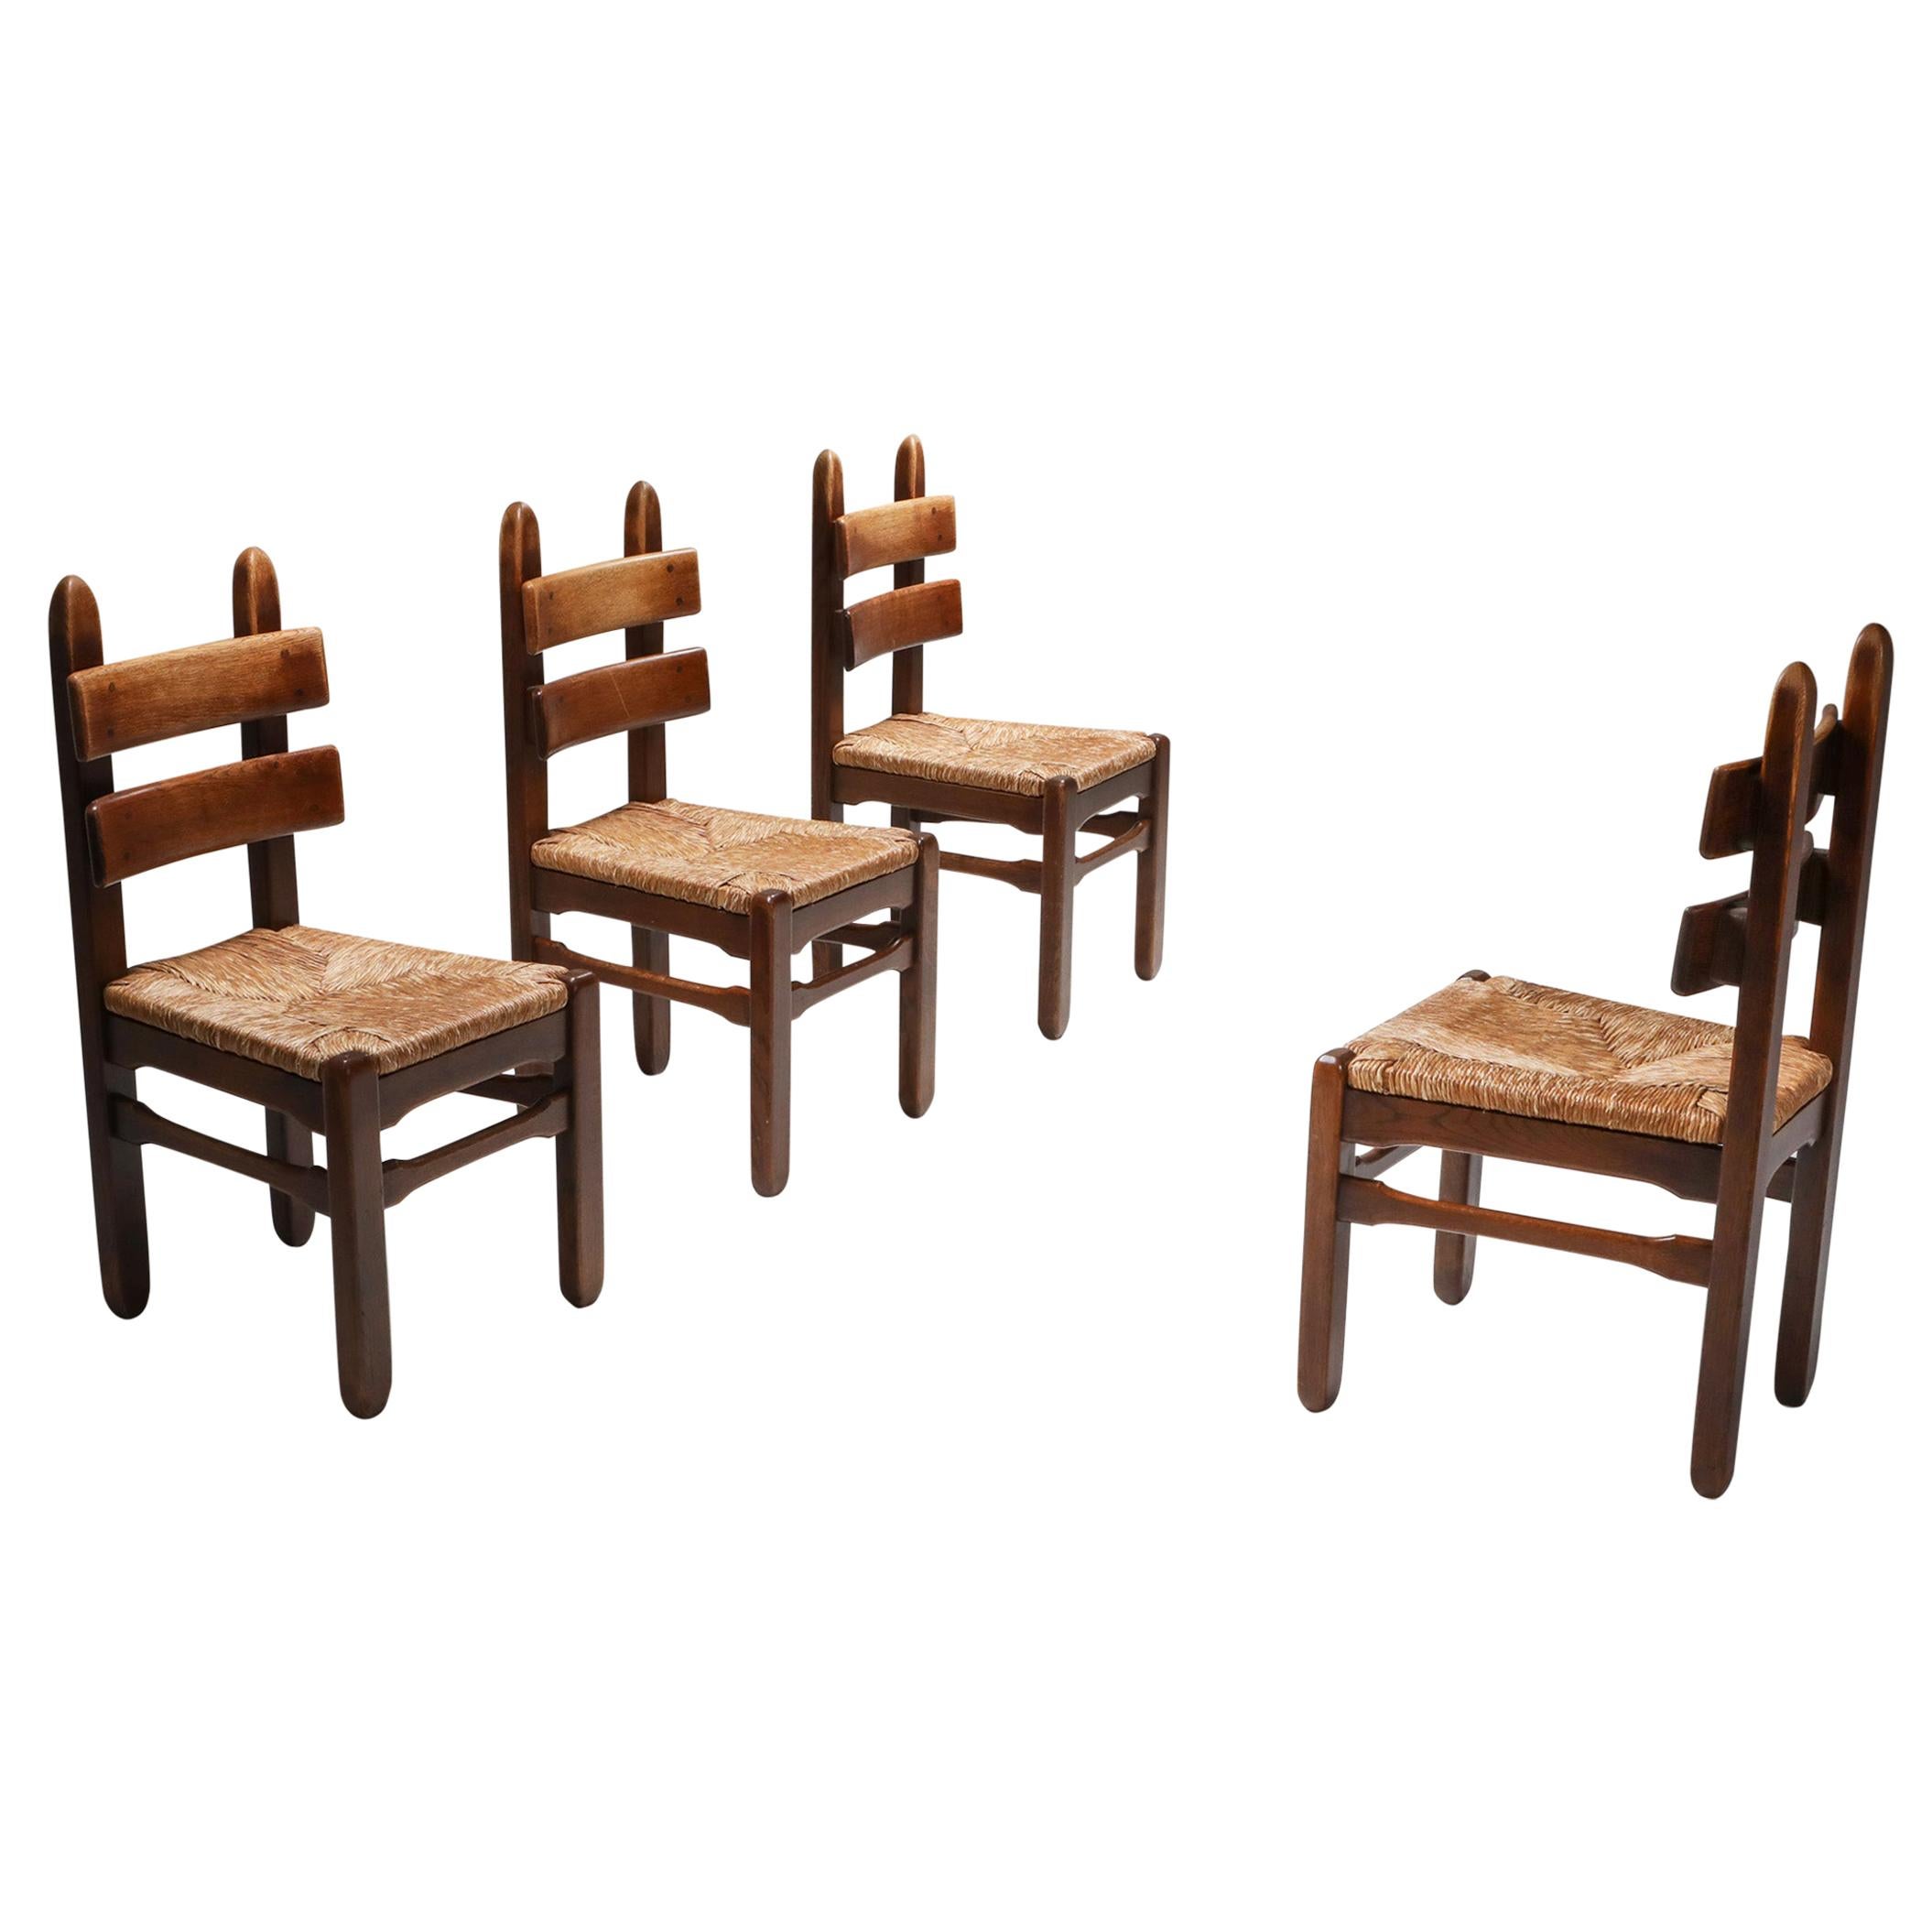 Rustic Modern Oak and Cord Chairs